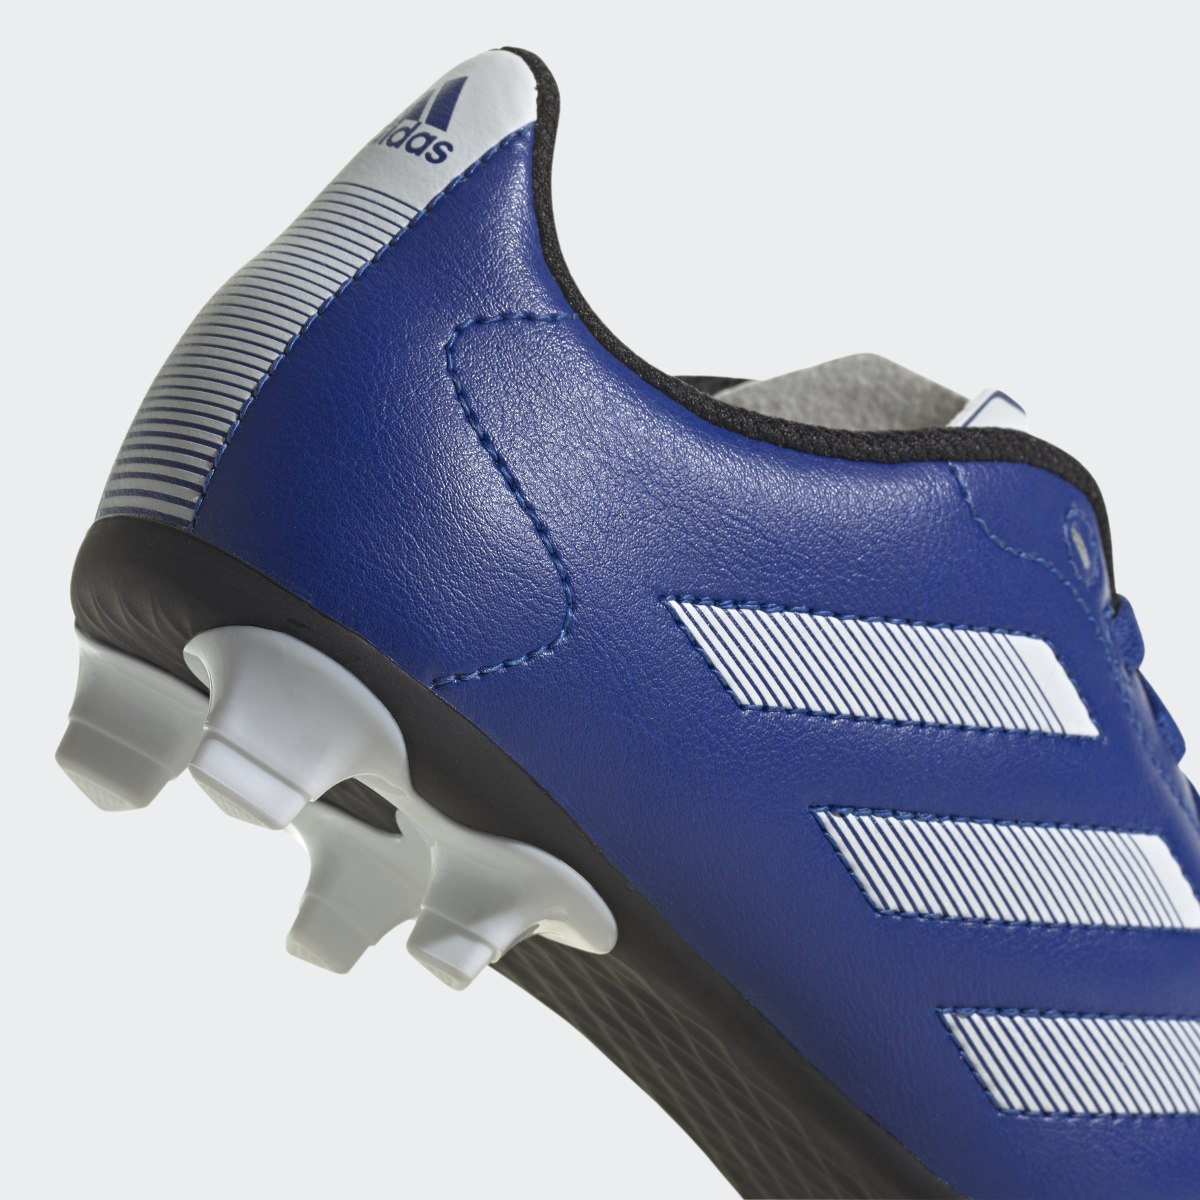 Adidas Goletto VIII Firm Ground Boots. 8